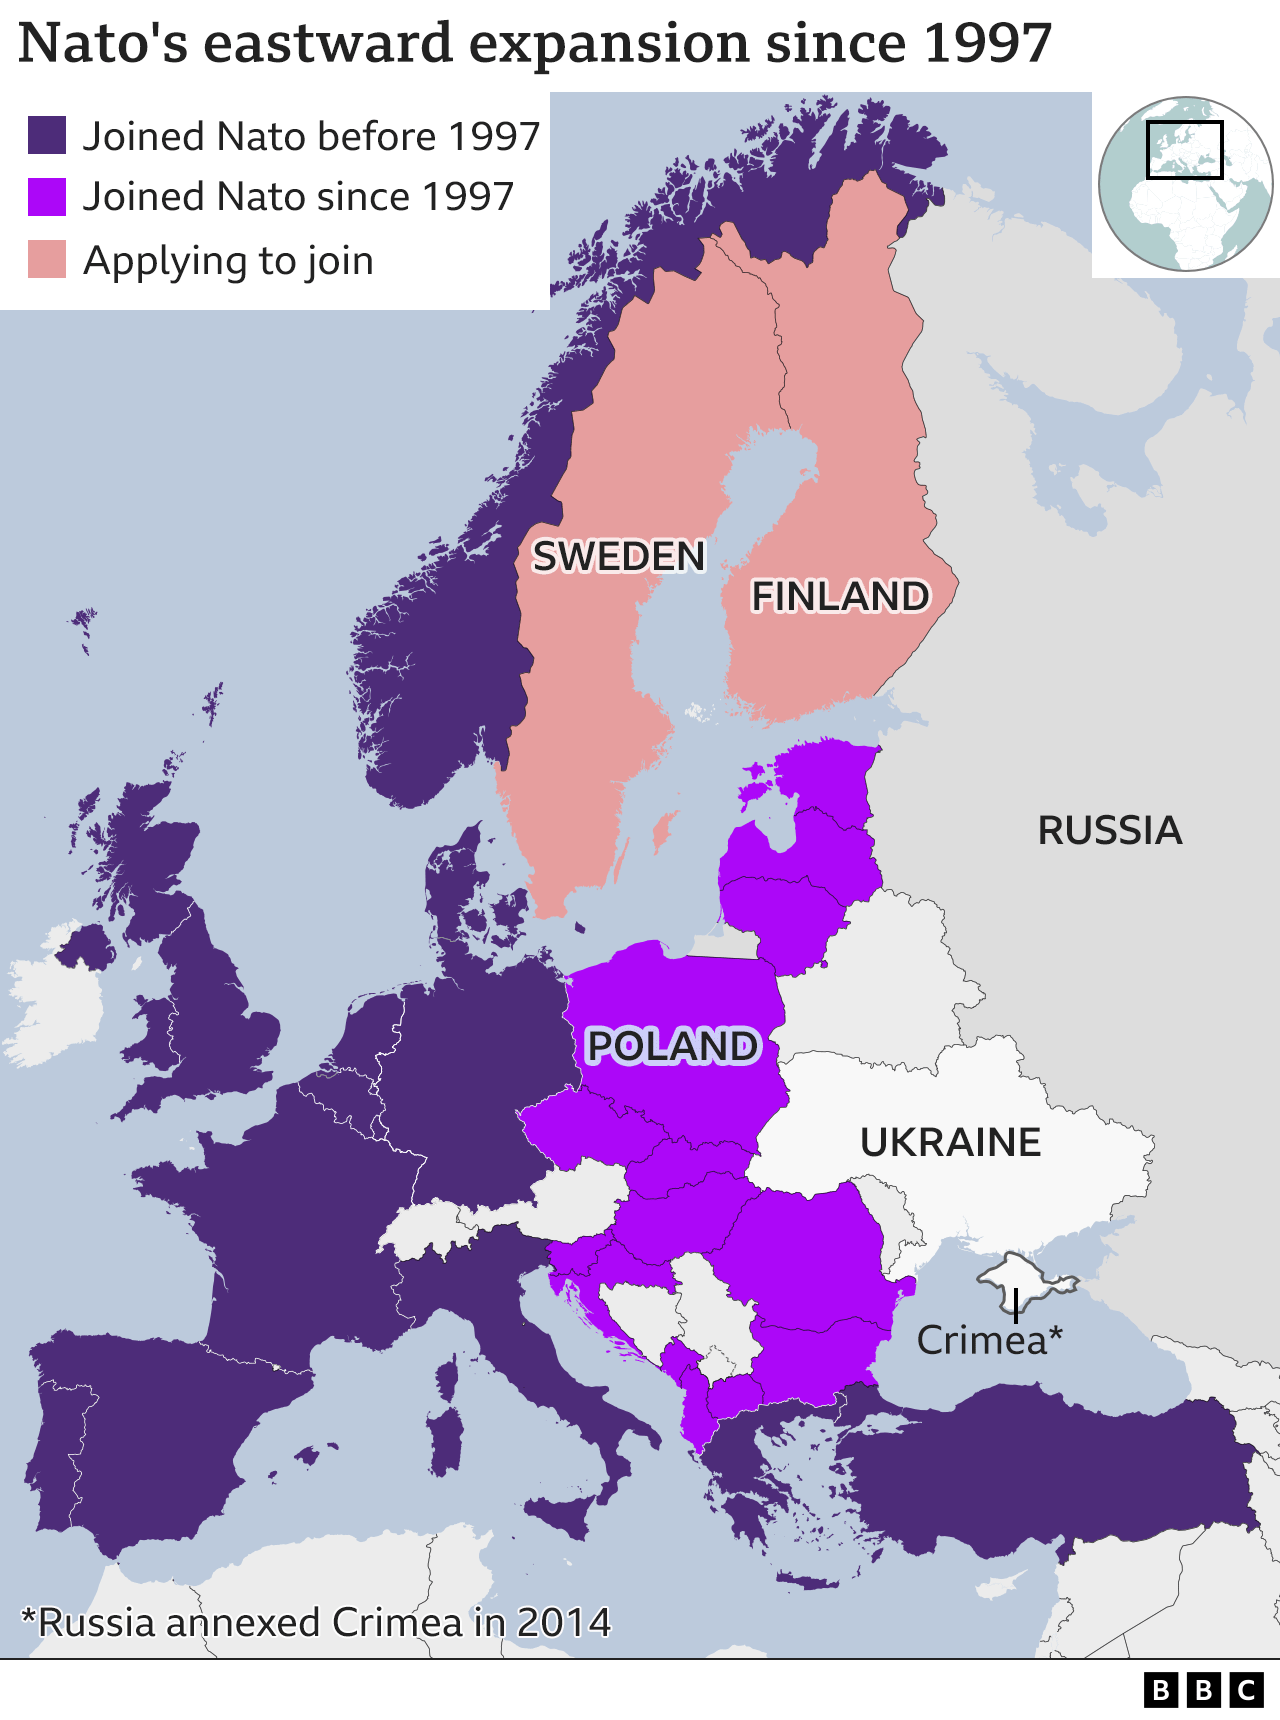 Mapa de la expansión de la OTAN en Europa